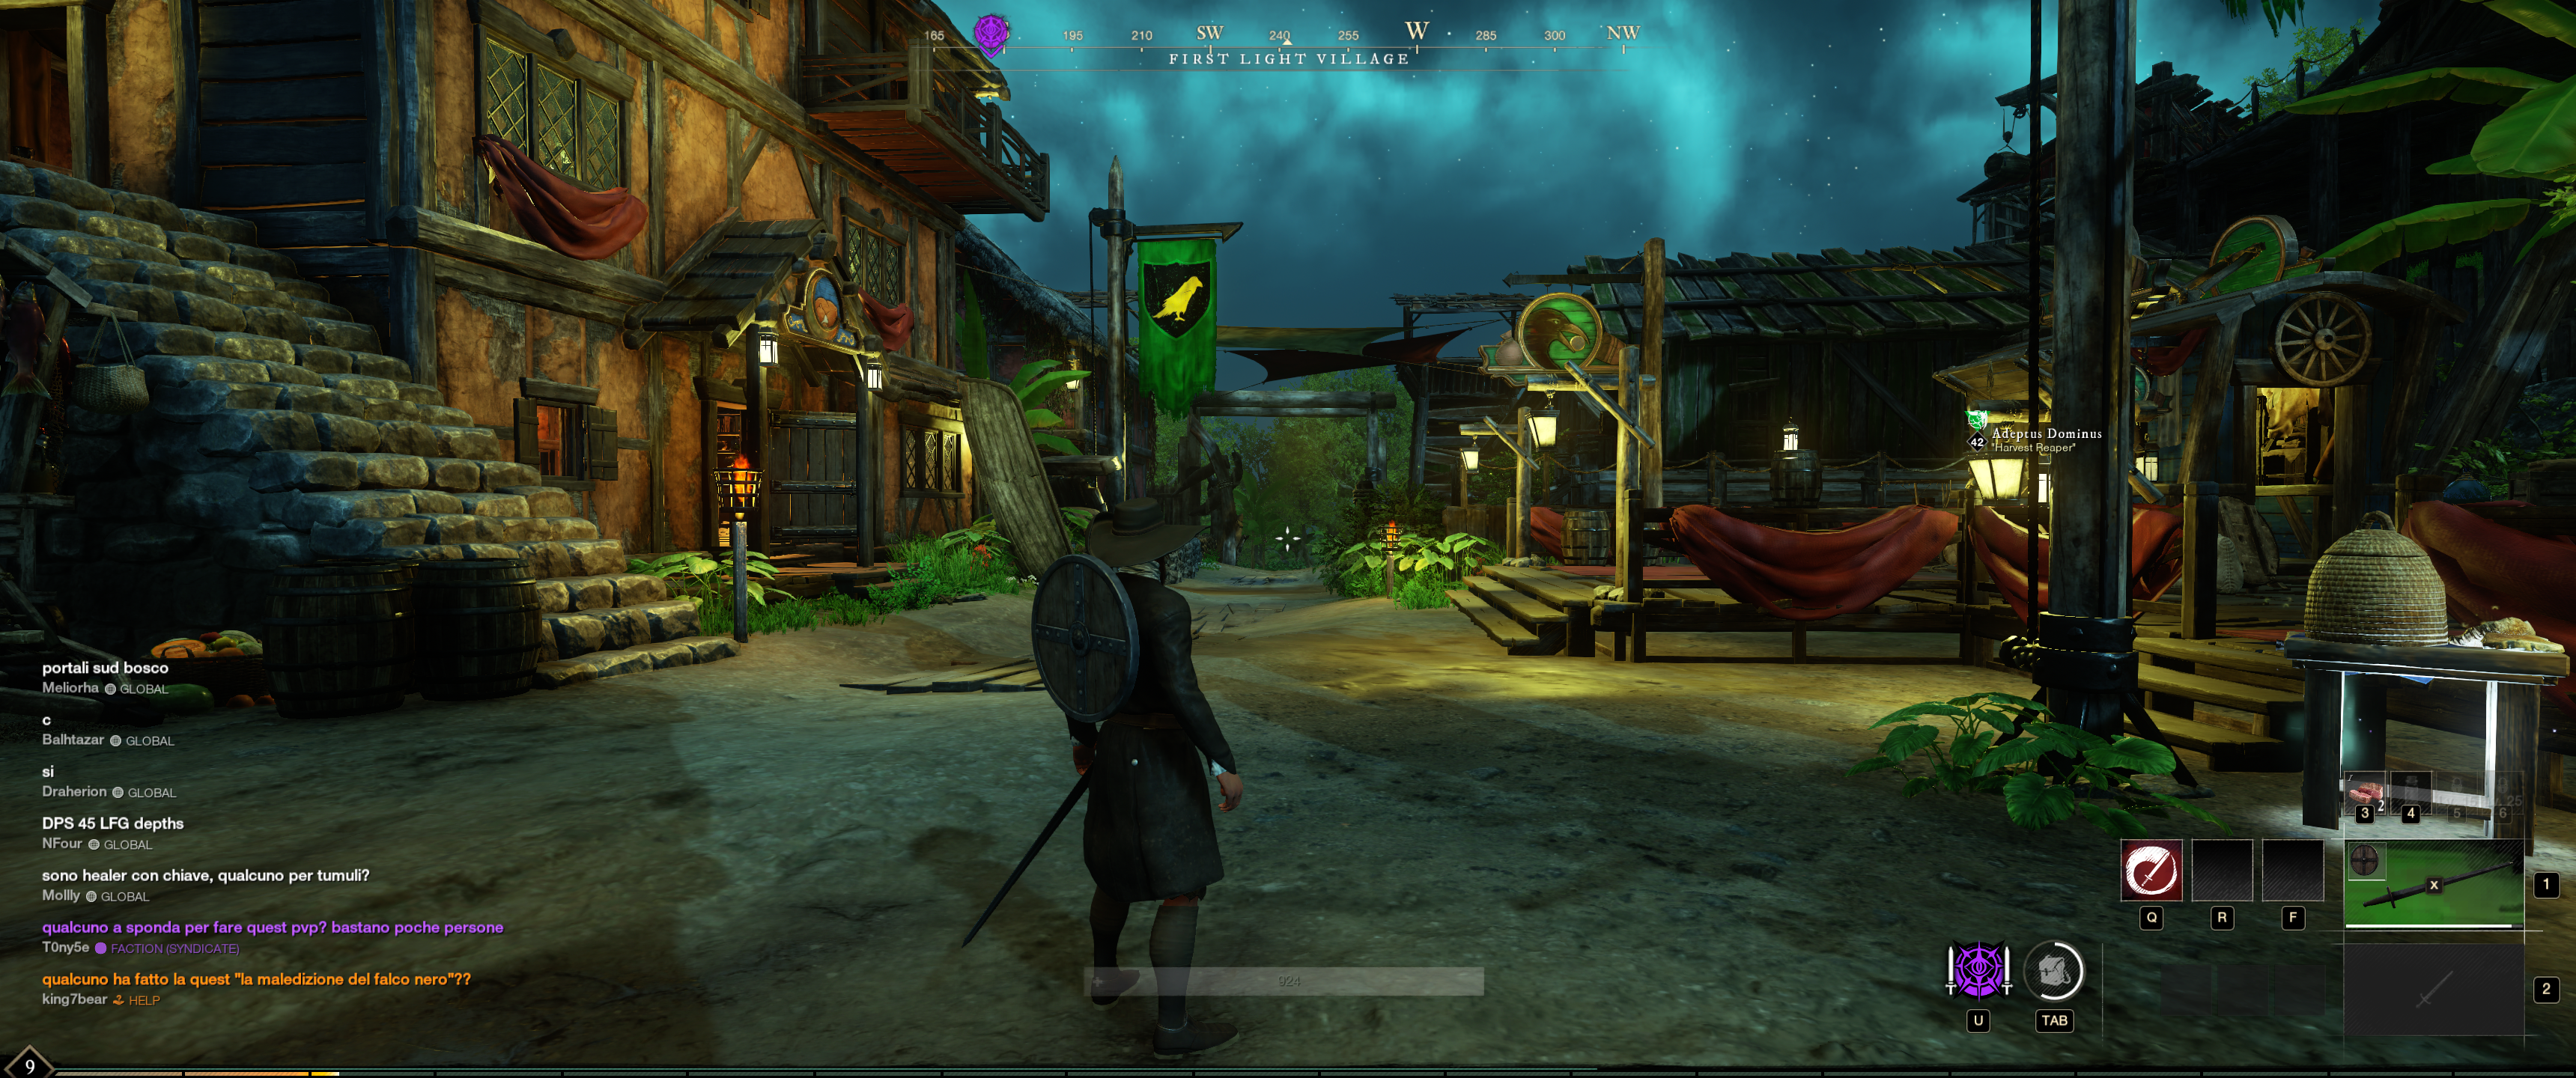 Players run around a New World starting village at night.